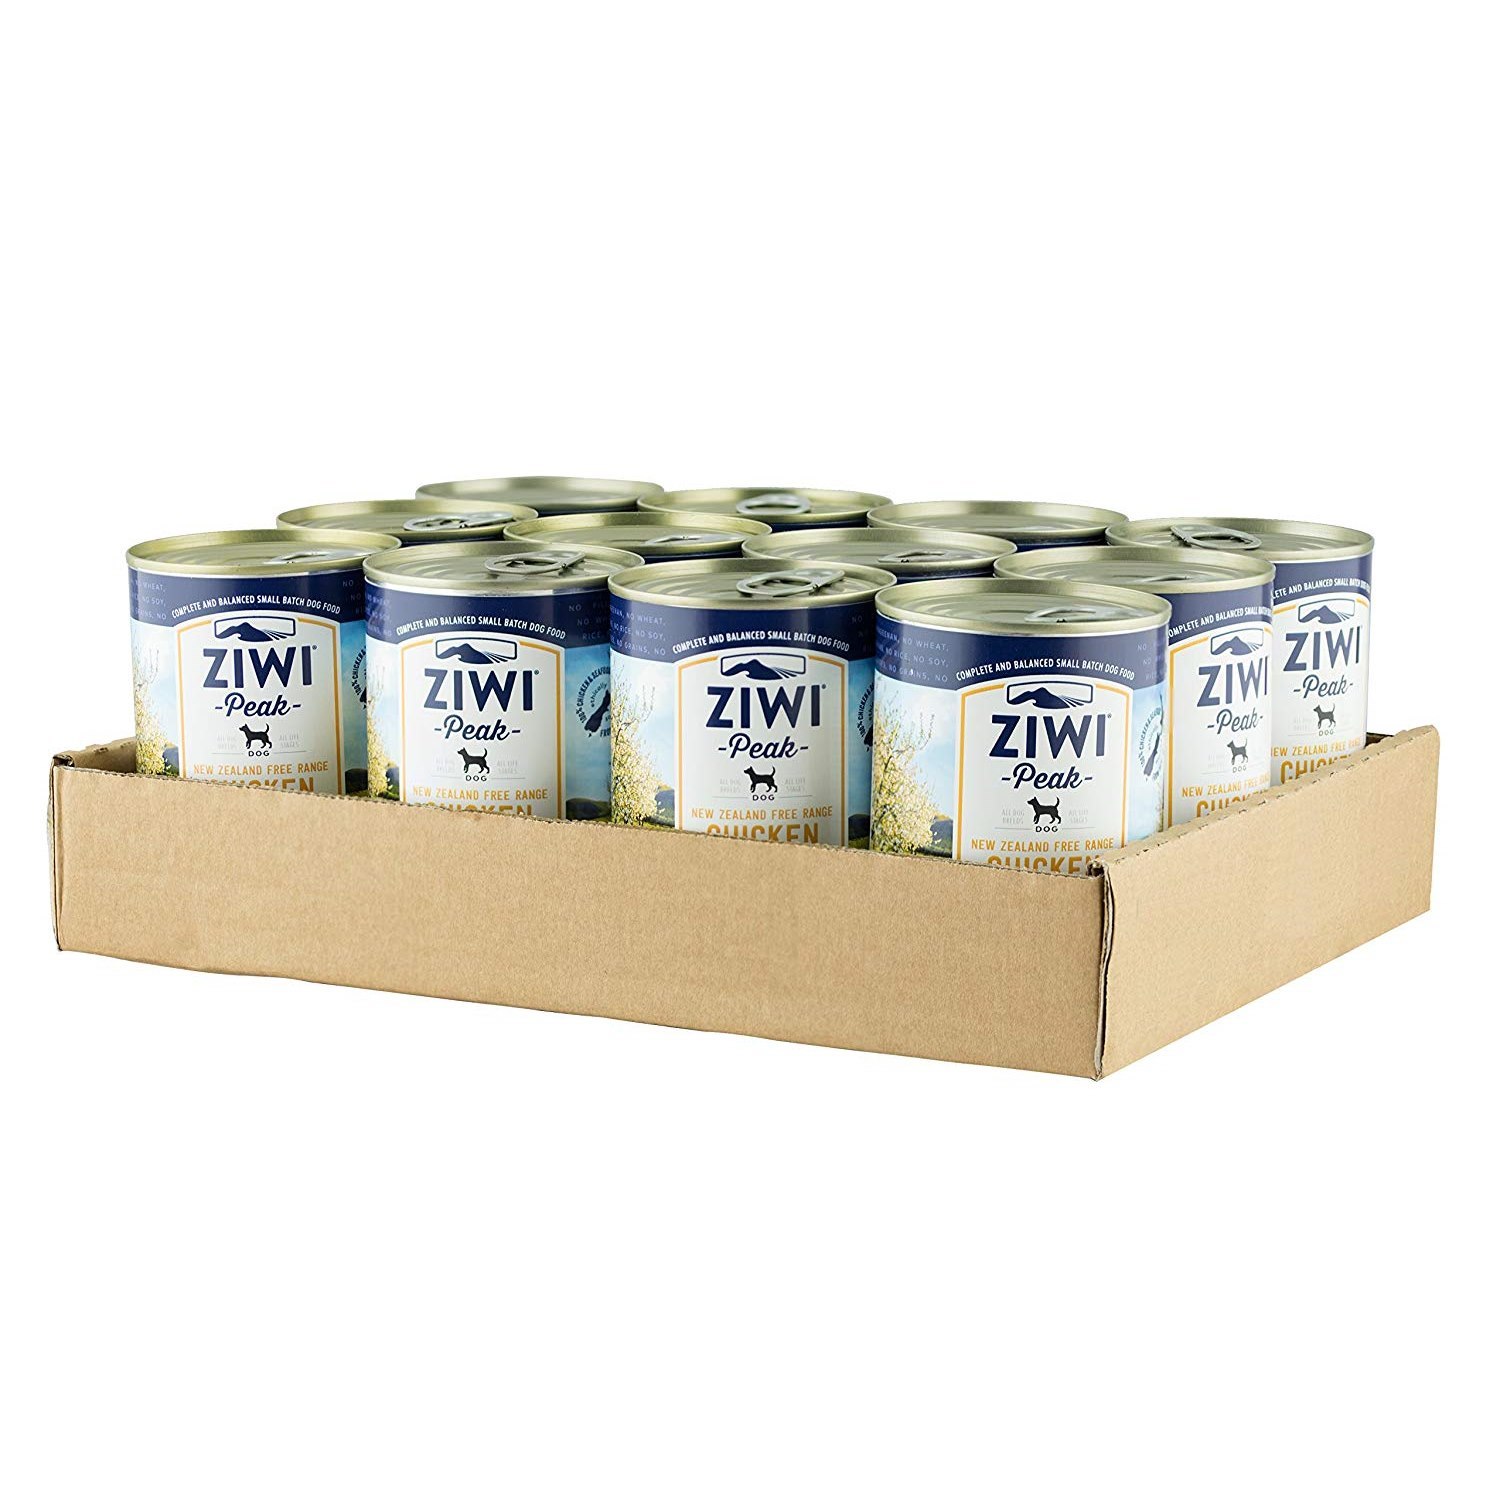 Ziwi Peak Moist Grain Free Dog Food - New Zealand Free Range Chicken- 390g x 12 Cans image 0